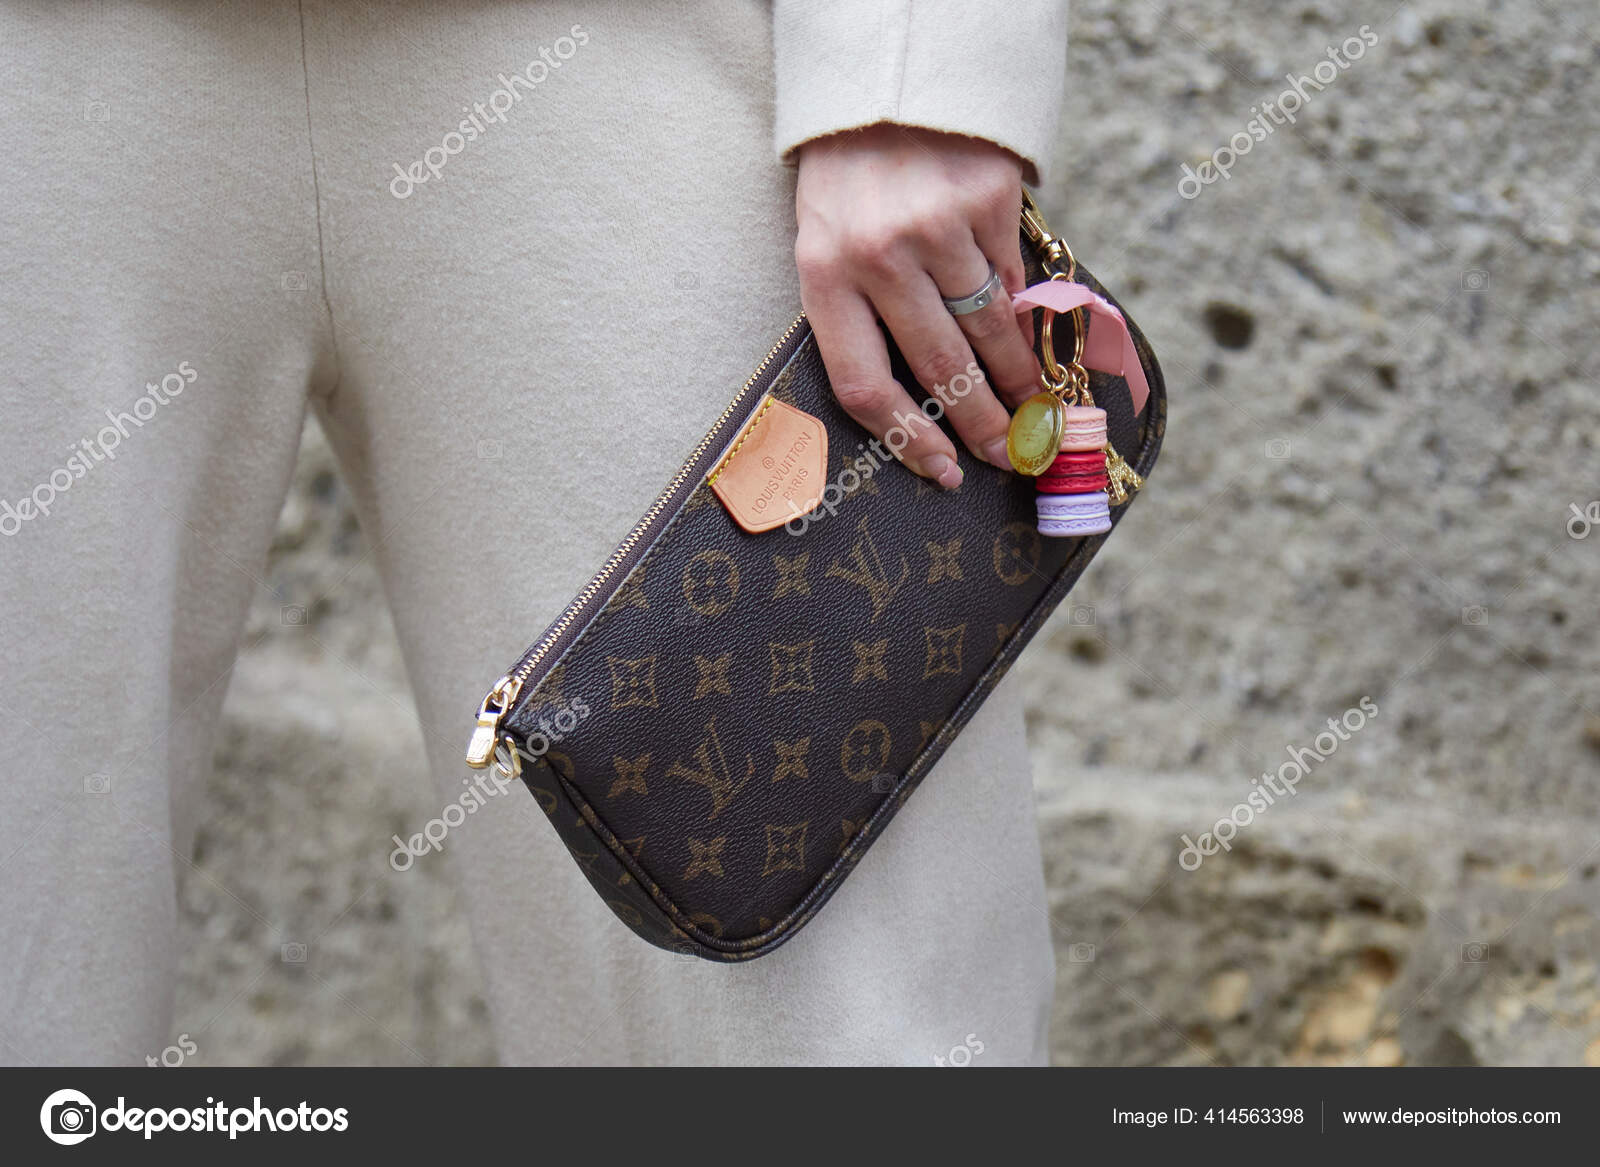 Louis Vuitton, September